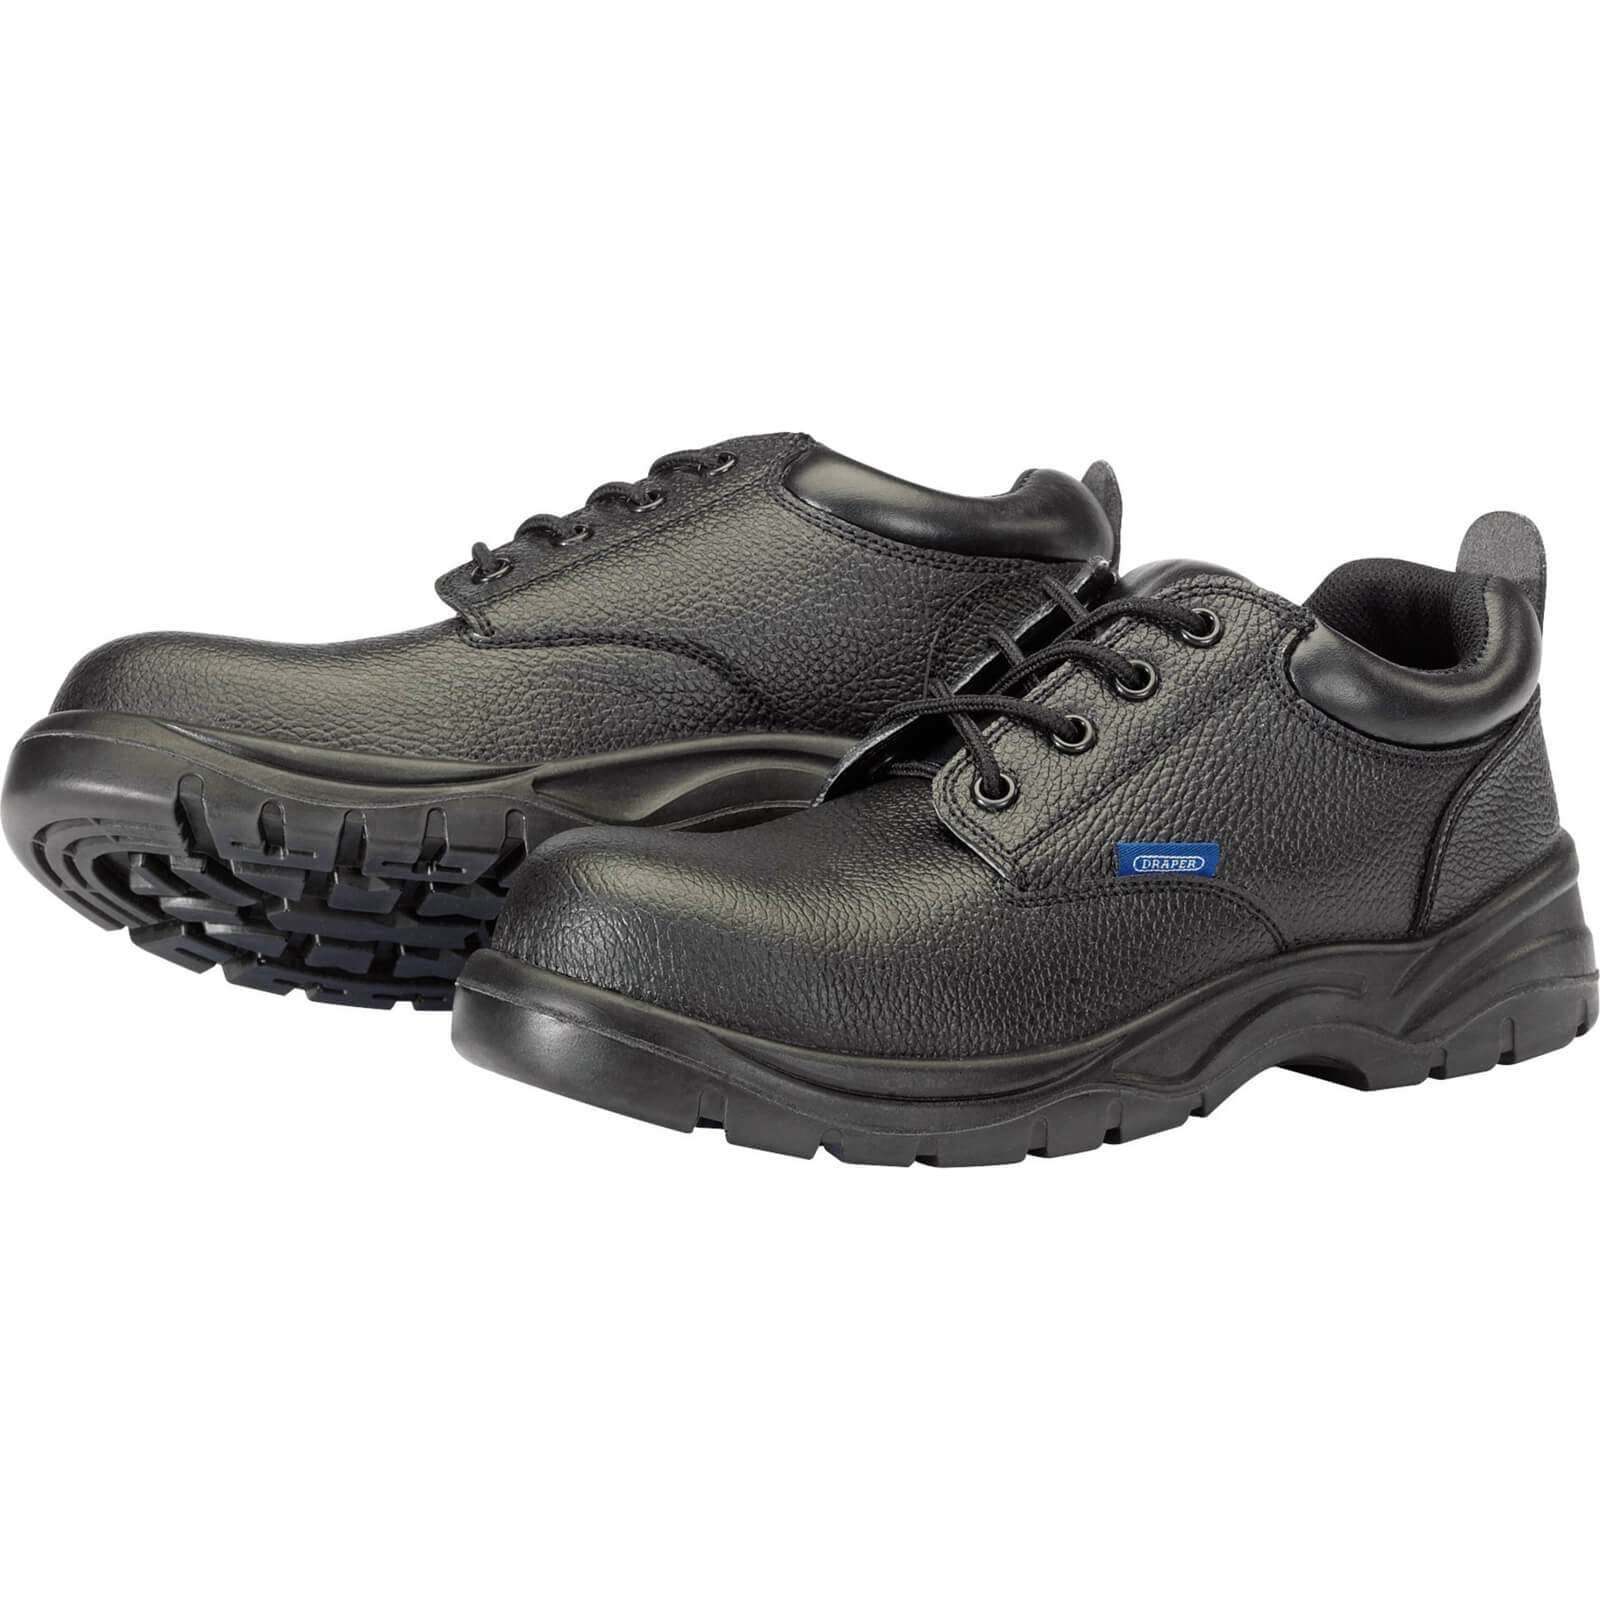 Image of Draper Non Metallic Composite Safety Shoe Size 5